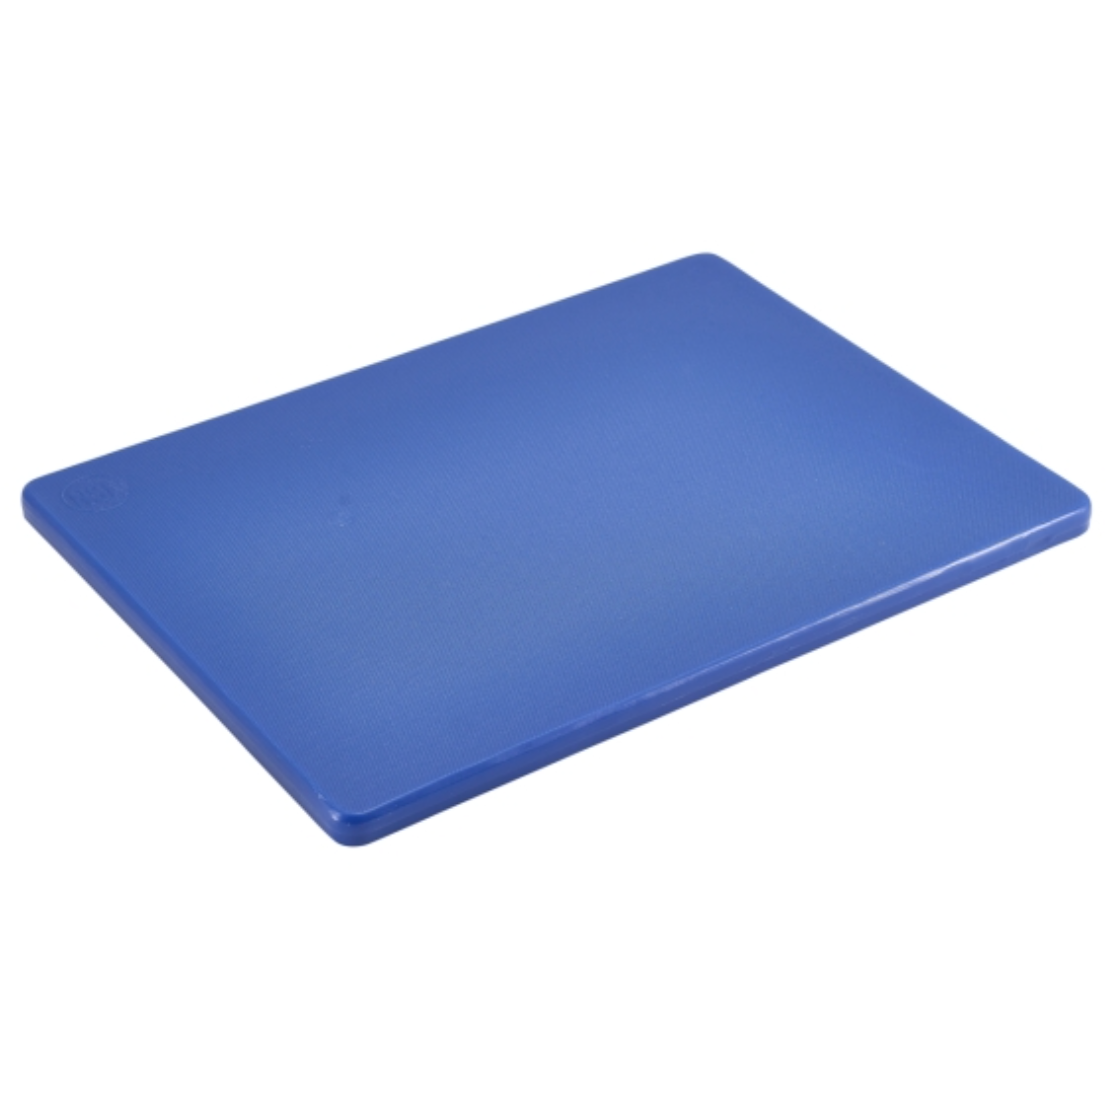 GenWare Blue Low Density Chopping Board 45.7 x 30.5 x 1.2cm